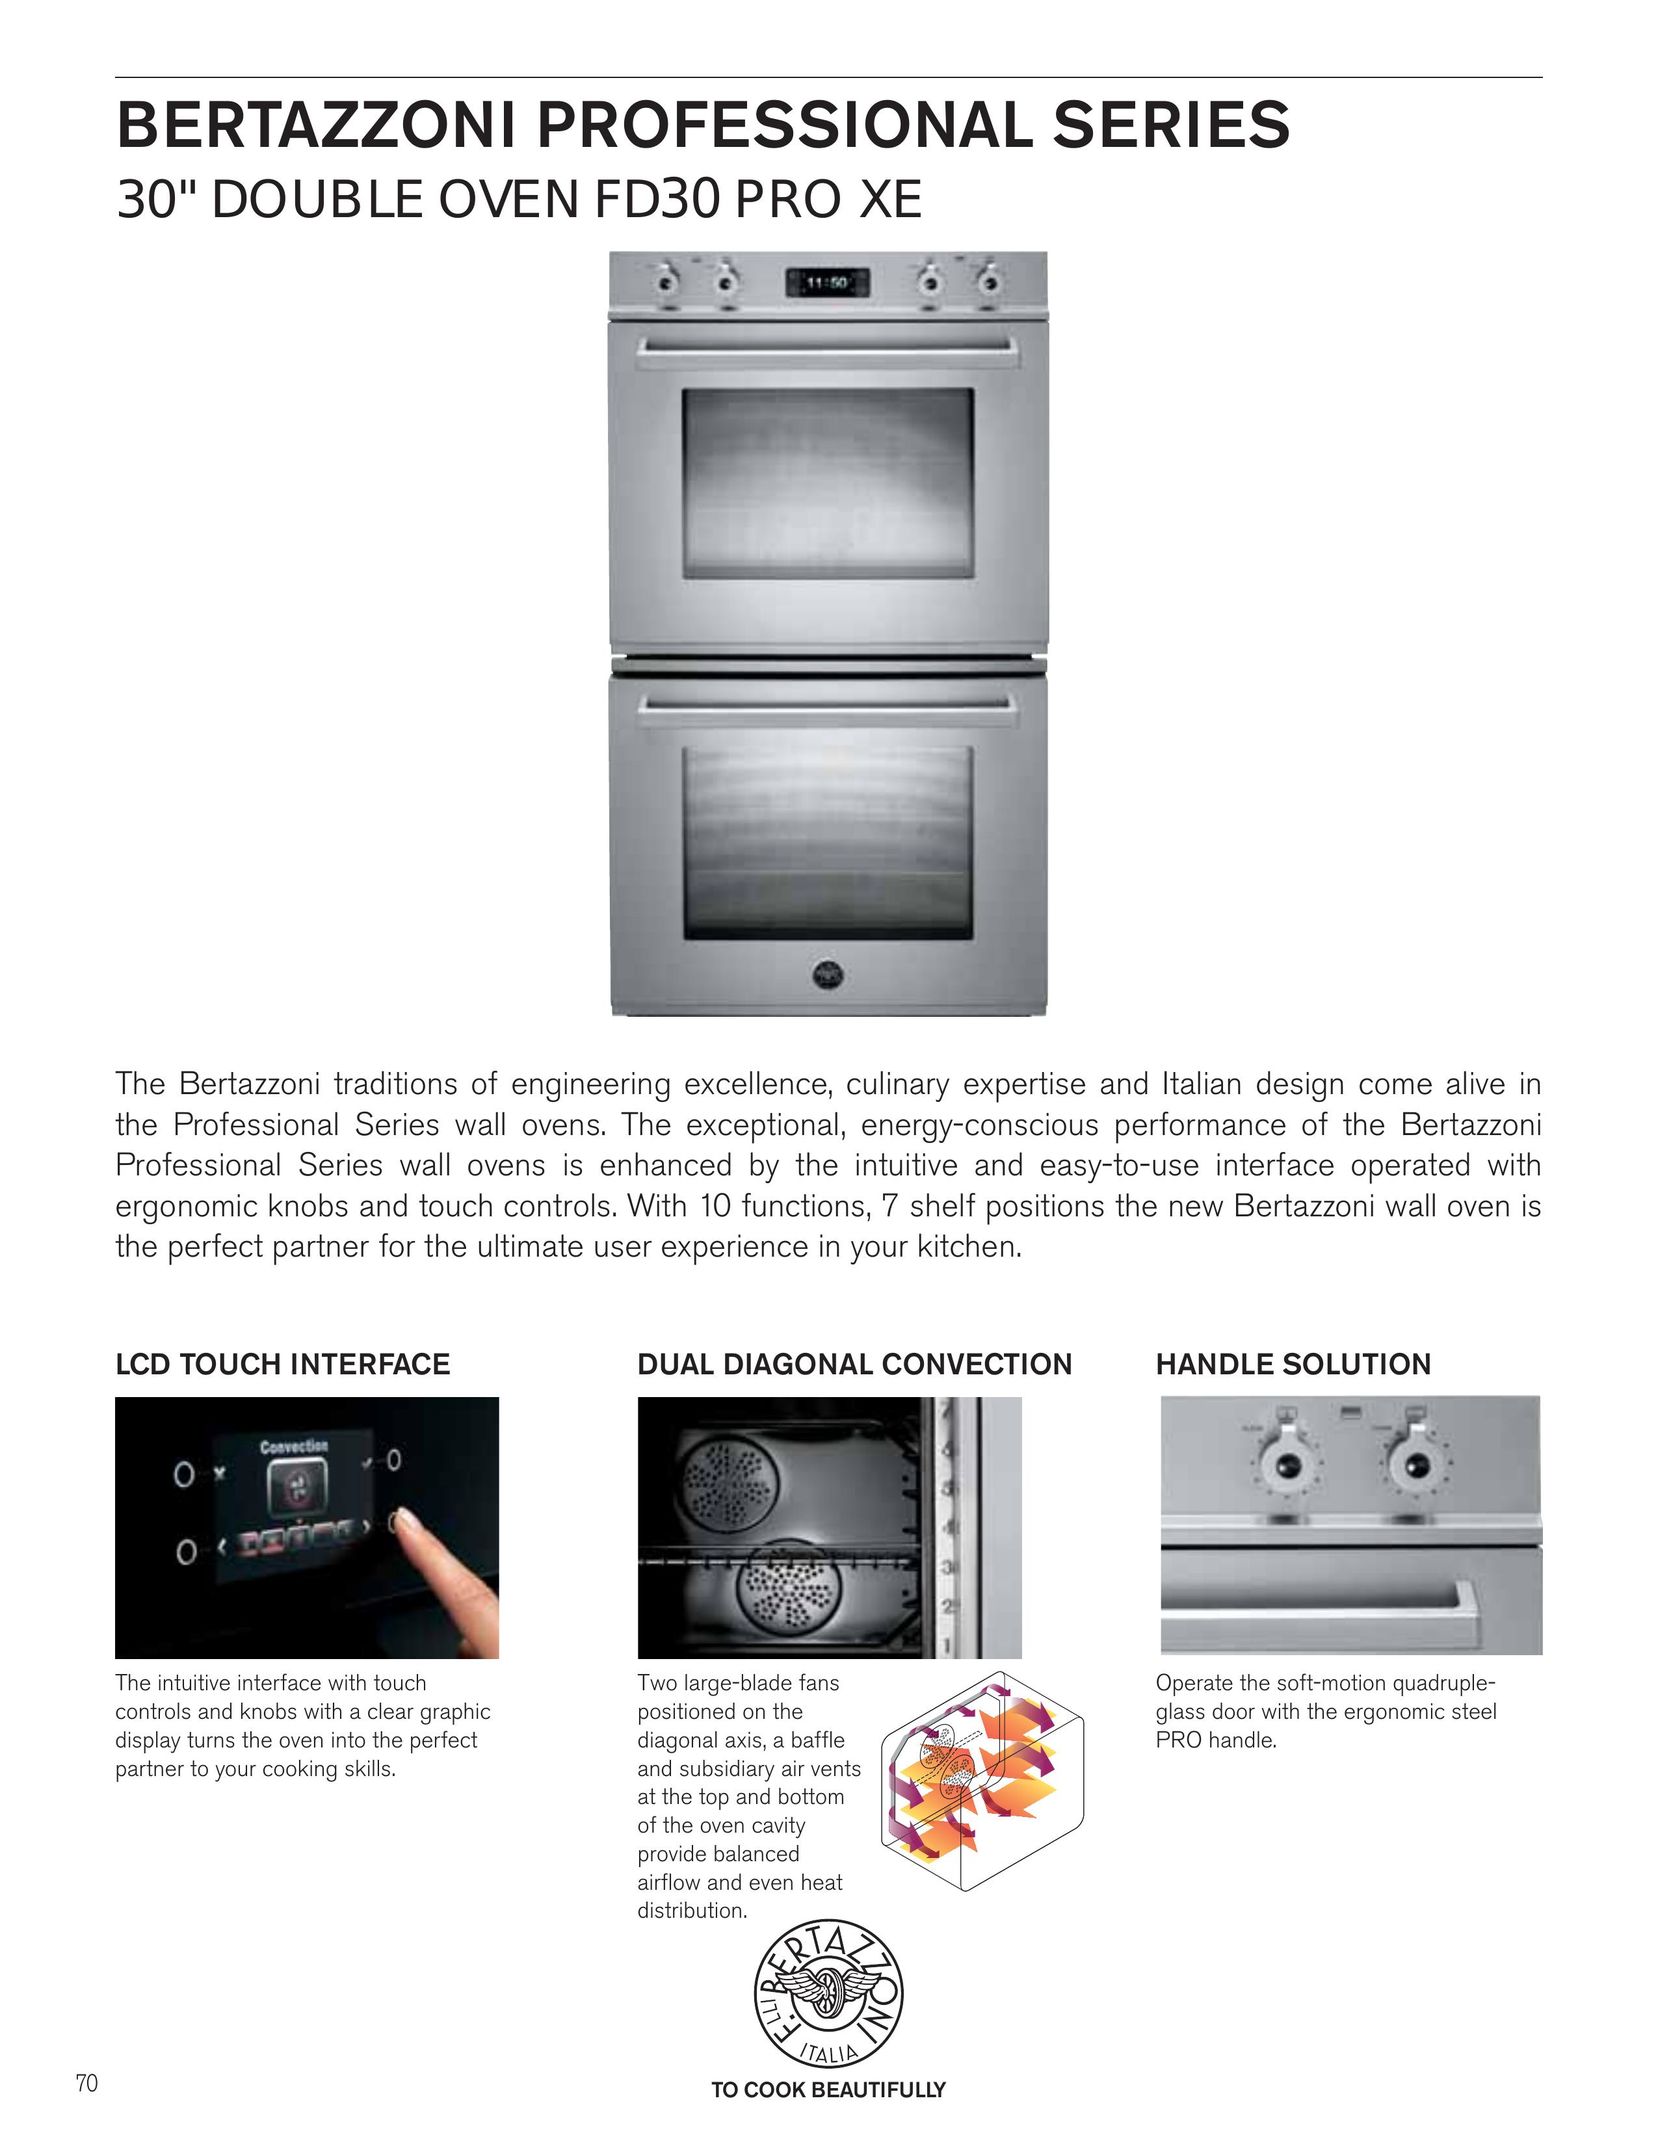 Bertazzoni FD30 PRO XE Double Oven User Manual